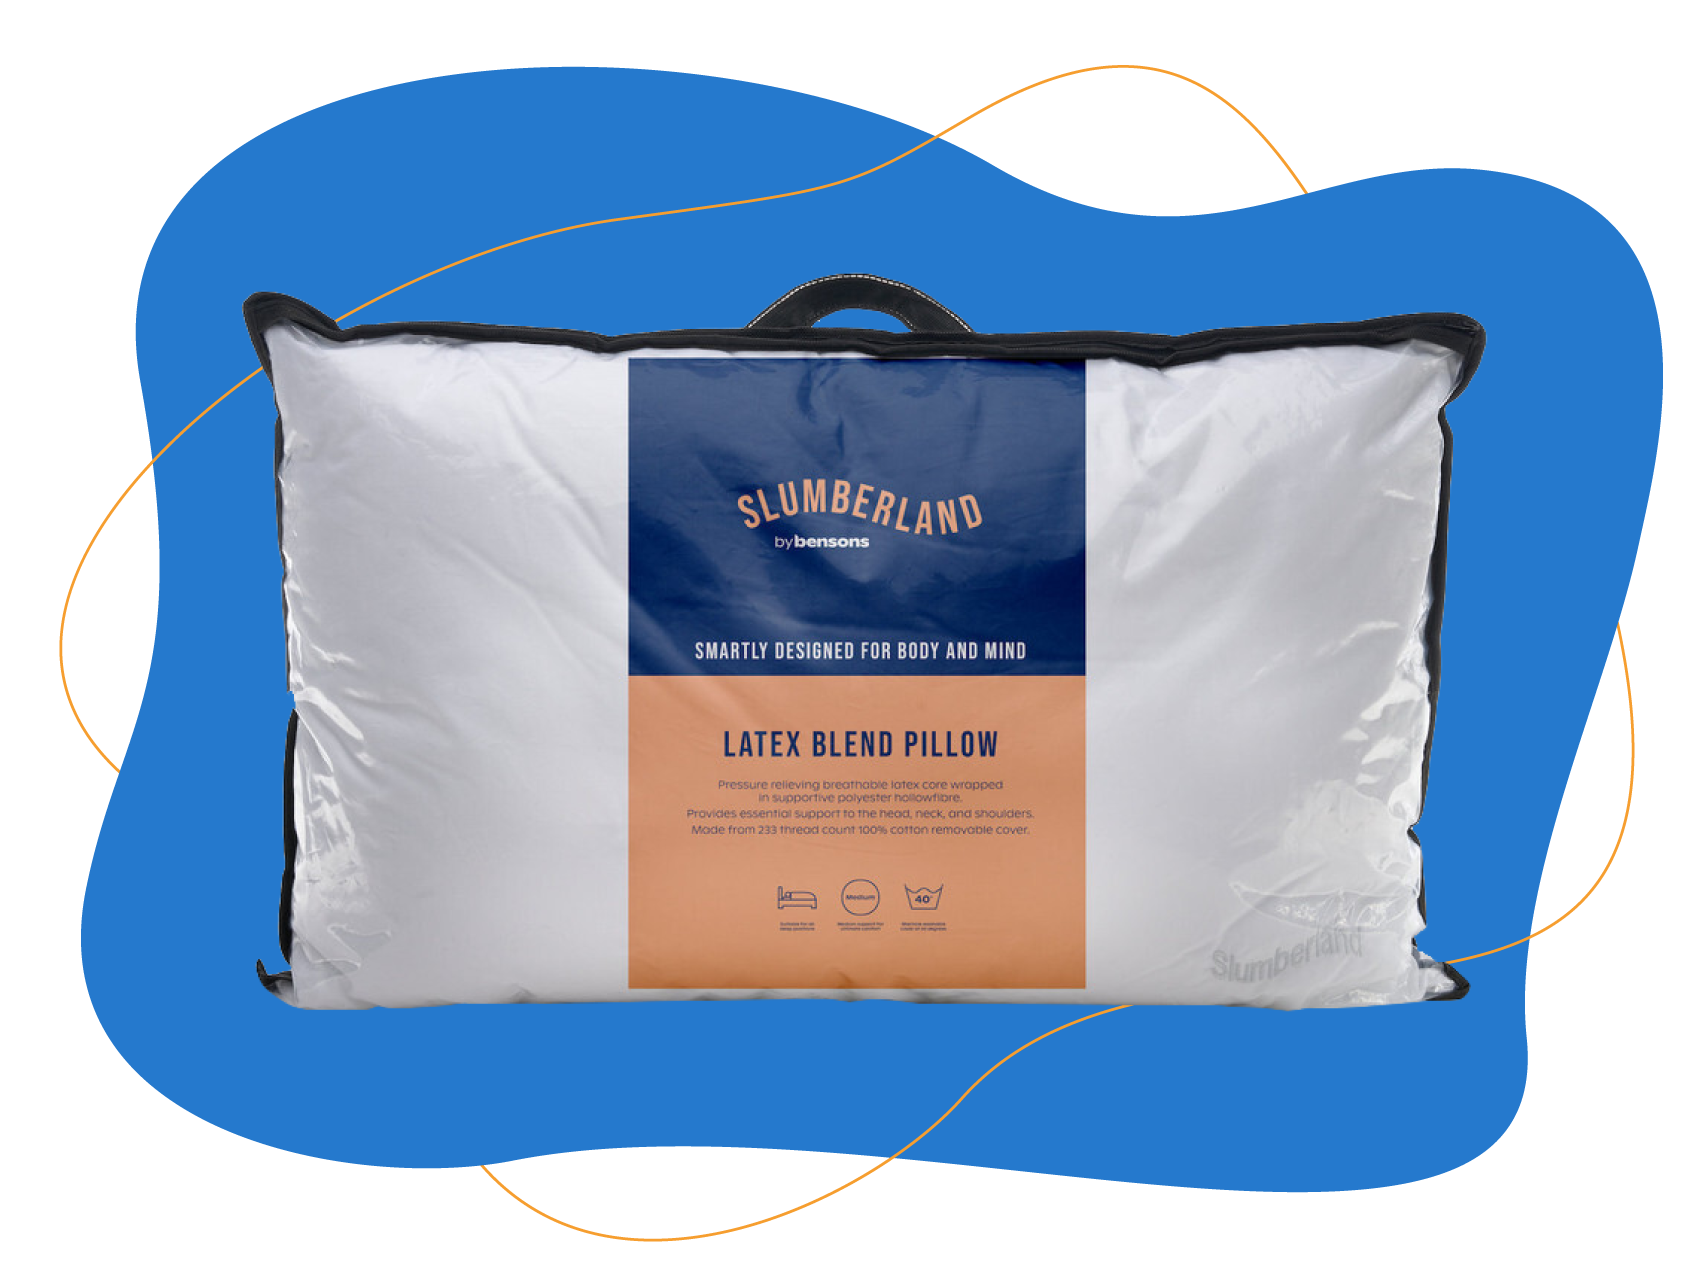 https://flppfftm.filerobot.com/MUK/Brands+and+Retailers/Bensons+for+Beds/Bensons+For+Beds+Pillows/Bensons+For+Beds+Slumberland+Latex+Blend+Pillow/Bensons-for-beds-slumberland-latex-blend-pillow-in-bag.png?p=n